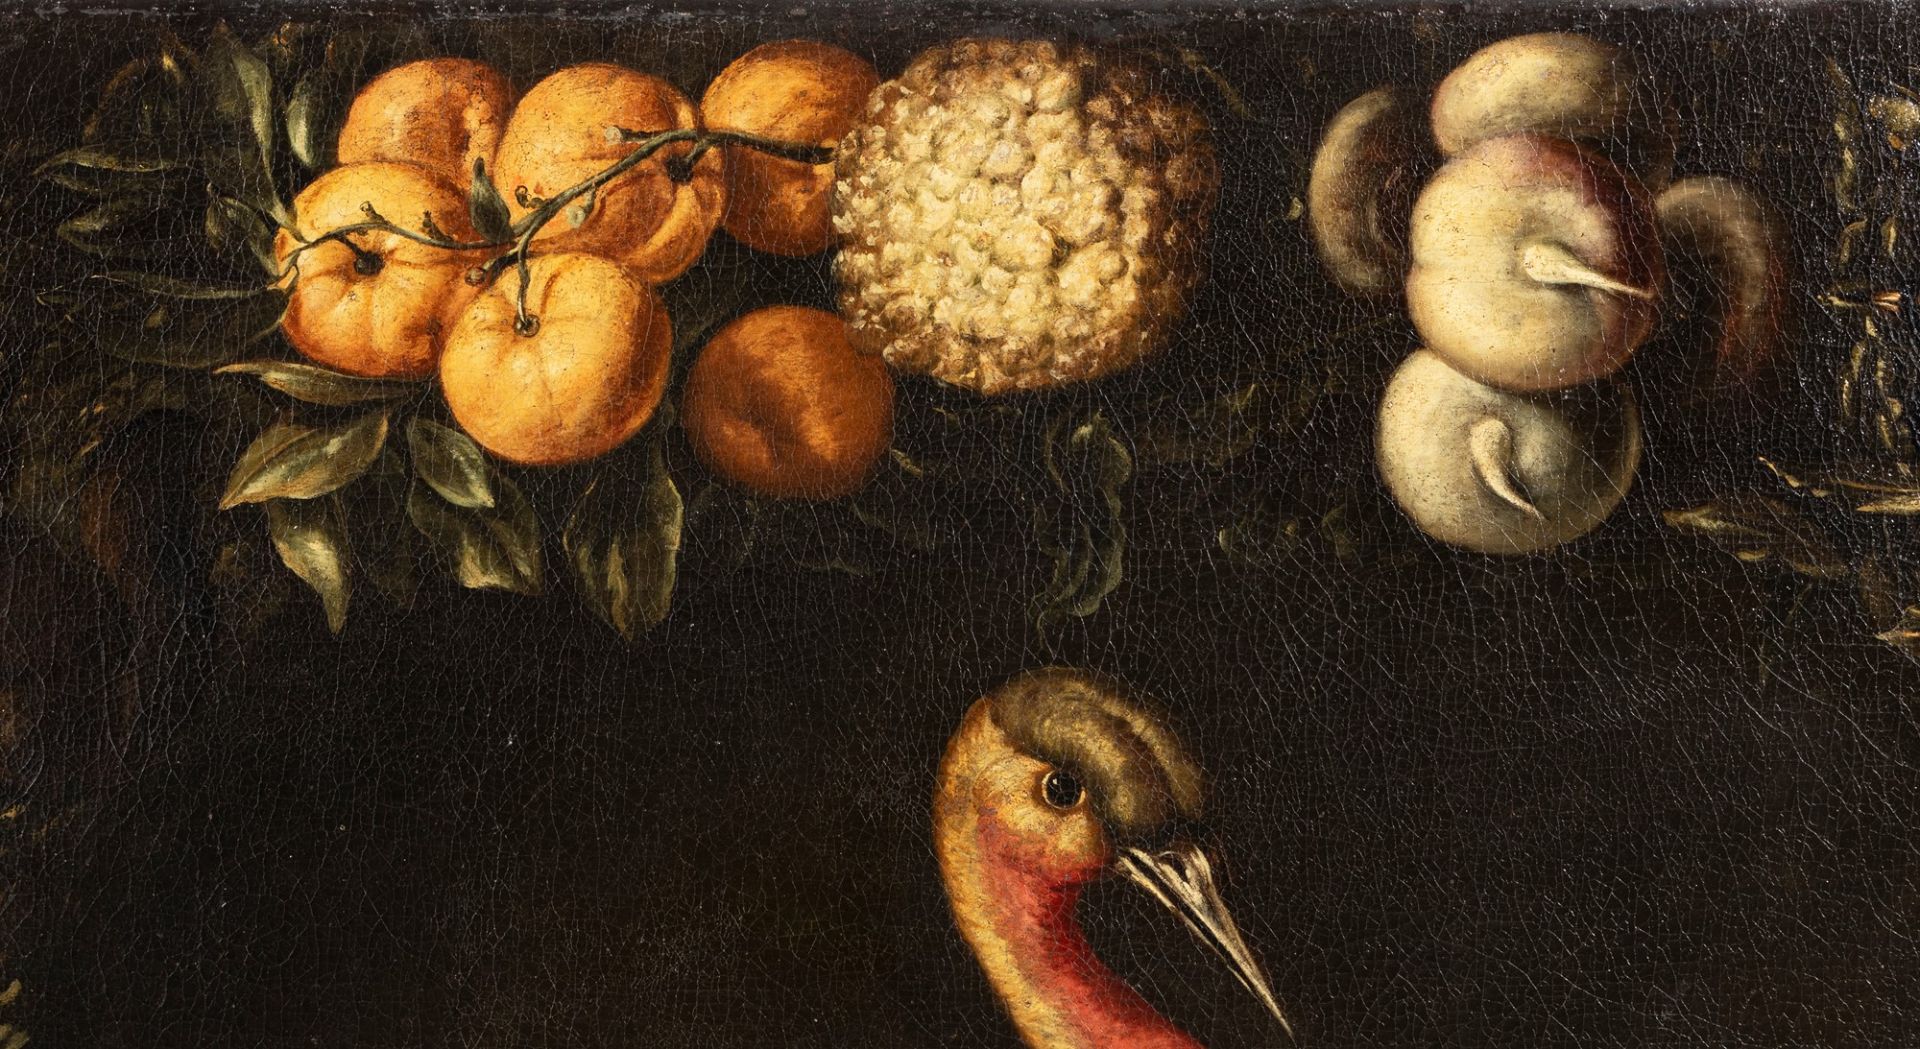 Neapolitan school, XVII century - Garland of fruit and vegetables with birds - Image 5 of 7